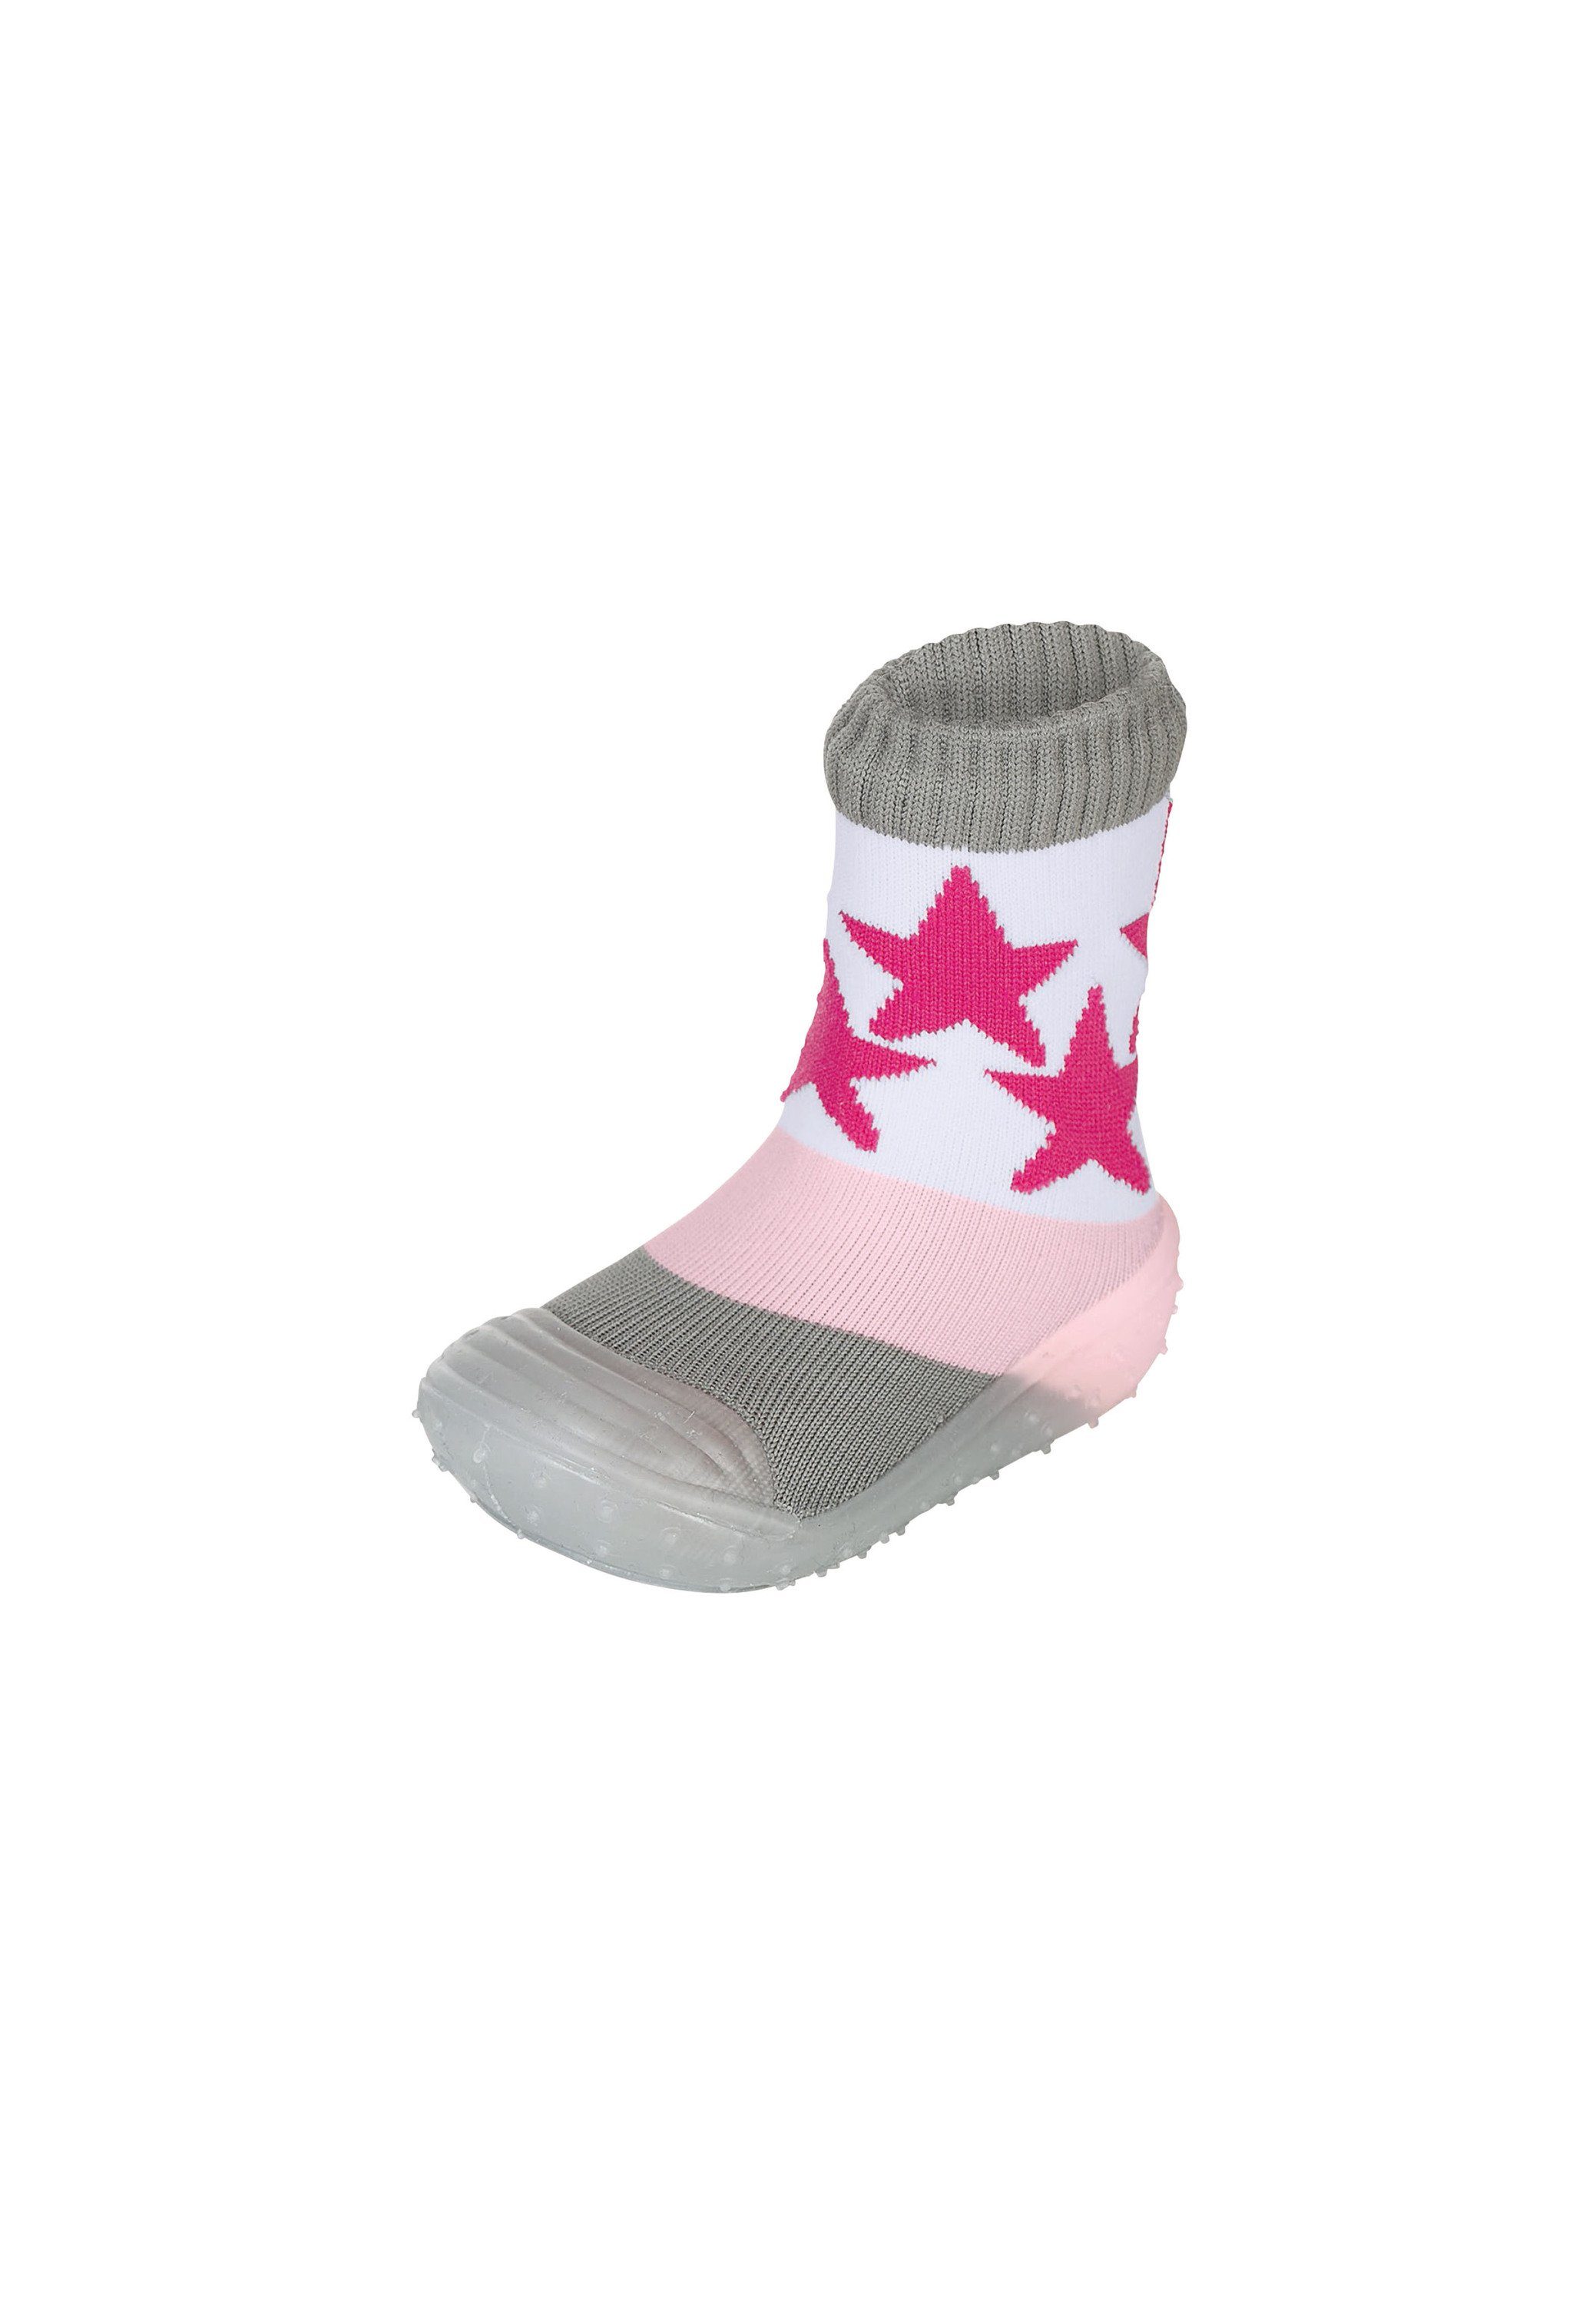 Adventure Socken rosa magenta Basicsocken - Sterne tintenblau Adventure-Socks - Motiv Sterntaler® Sockenschuhe Gummisohle - Socks schnelltrocknend Abenteuersocken, Sterne Kinder mit oder Adventure - Adventure-Socks transparenter mit